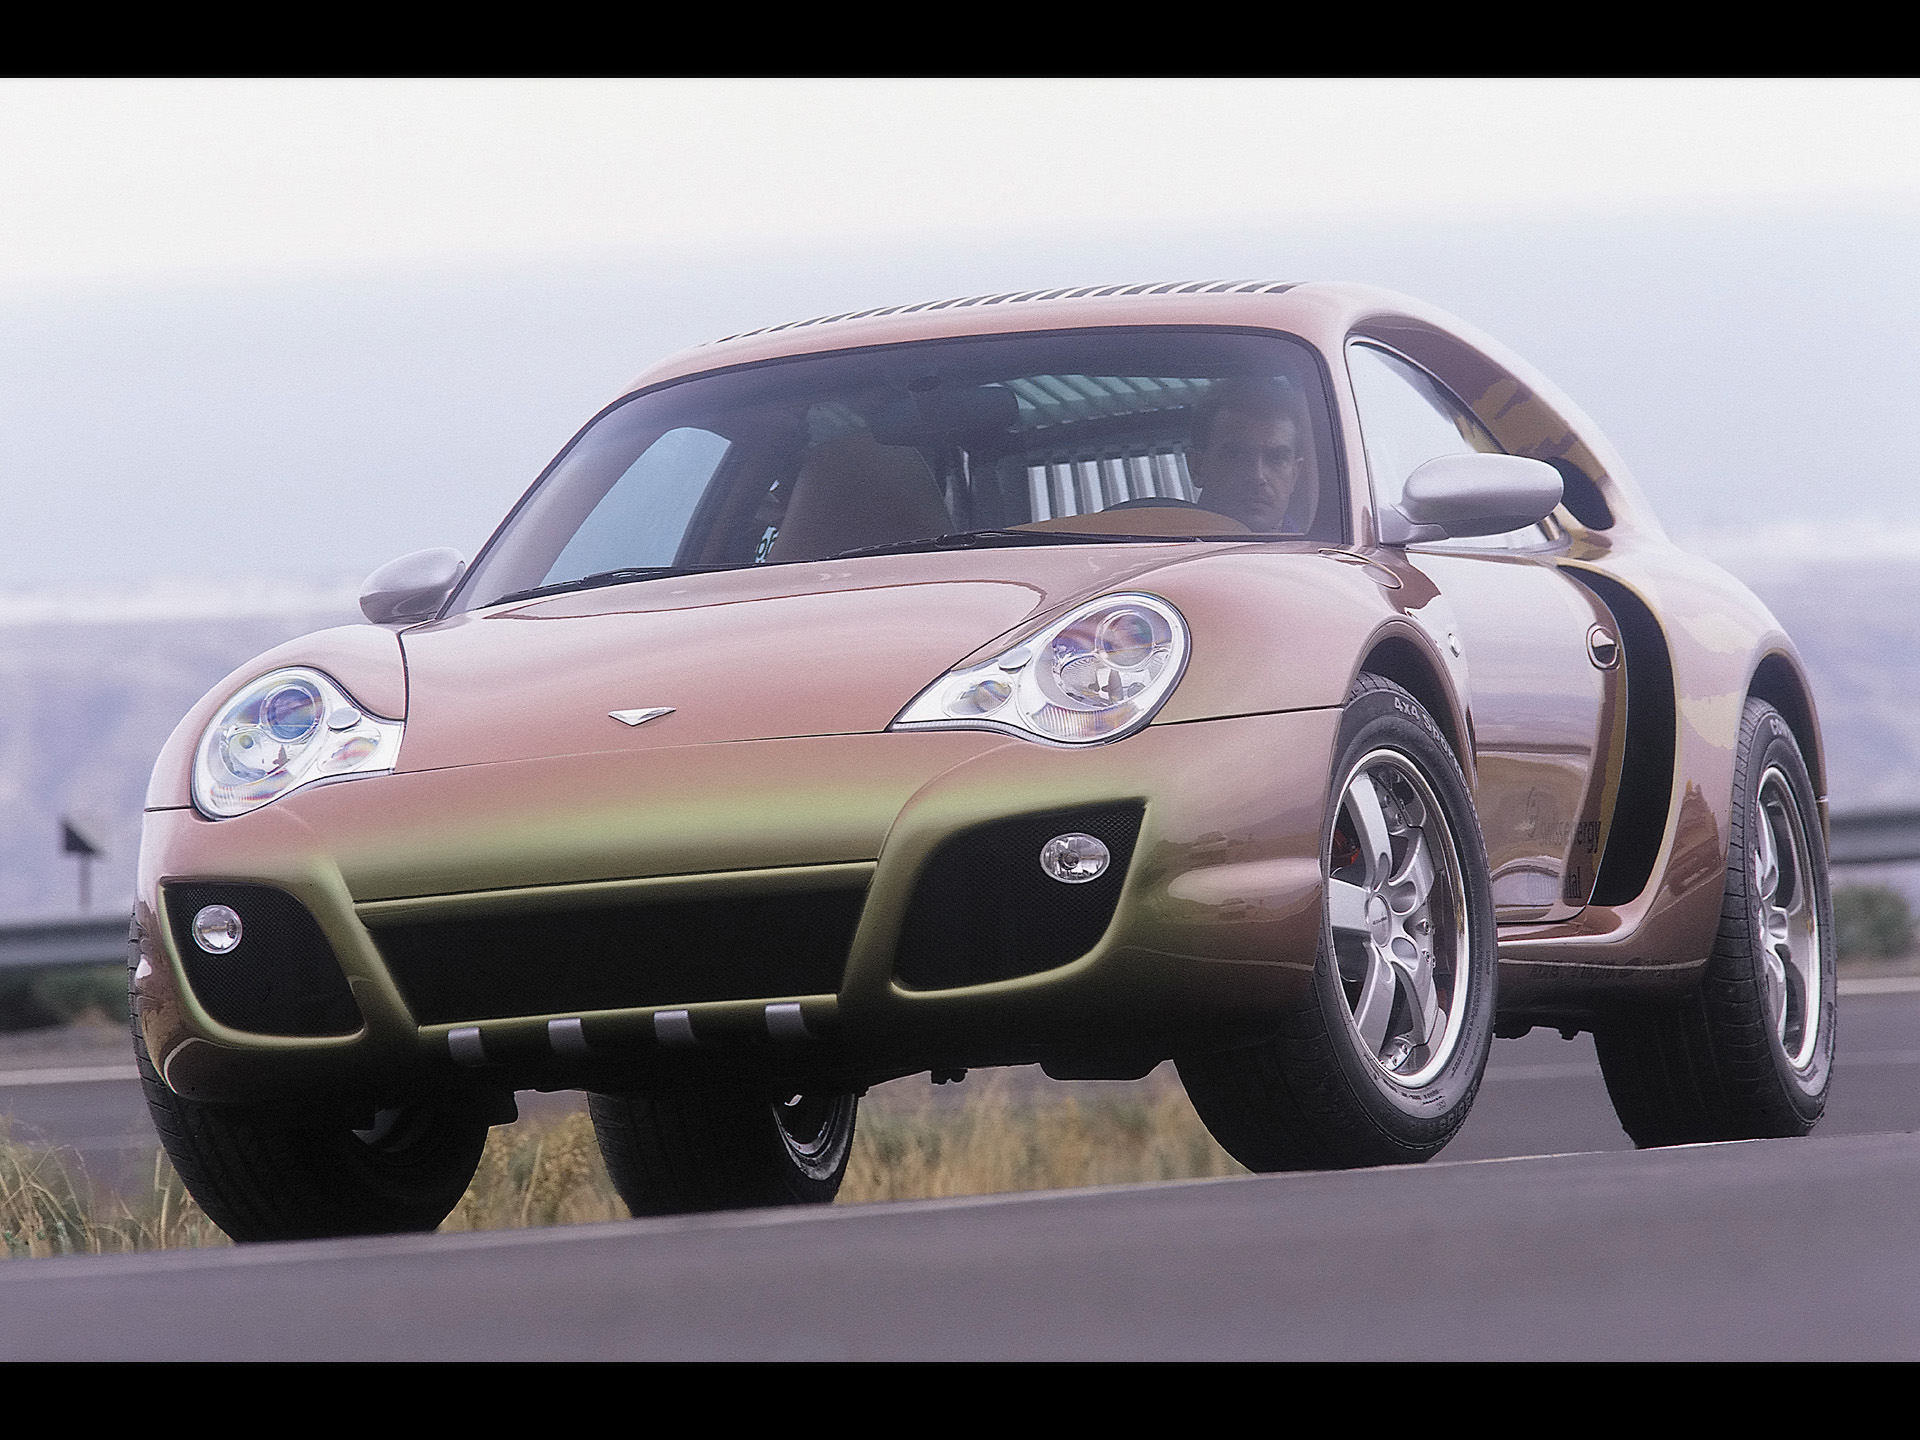 2003, Rinspeed, Porsche, Bedouin, 996, Turbo, Concept, Supercar, Pickup, Truck Wallpaper